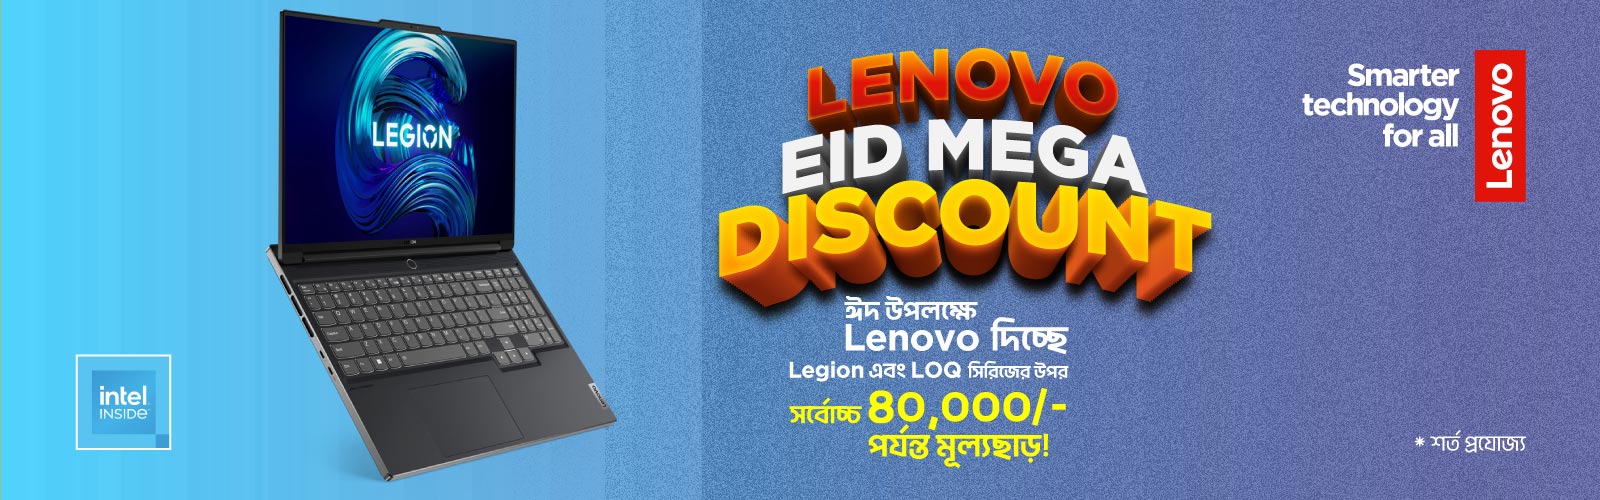 Lenovo Eid Mega Discount in Bangladesh